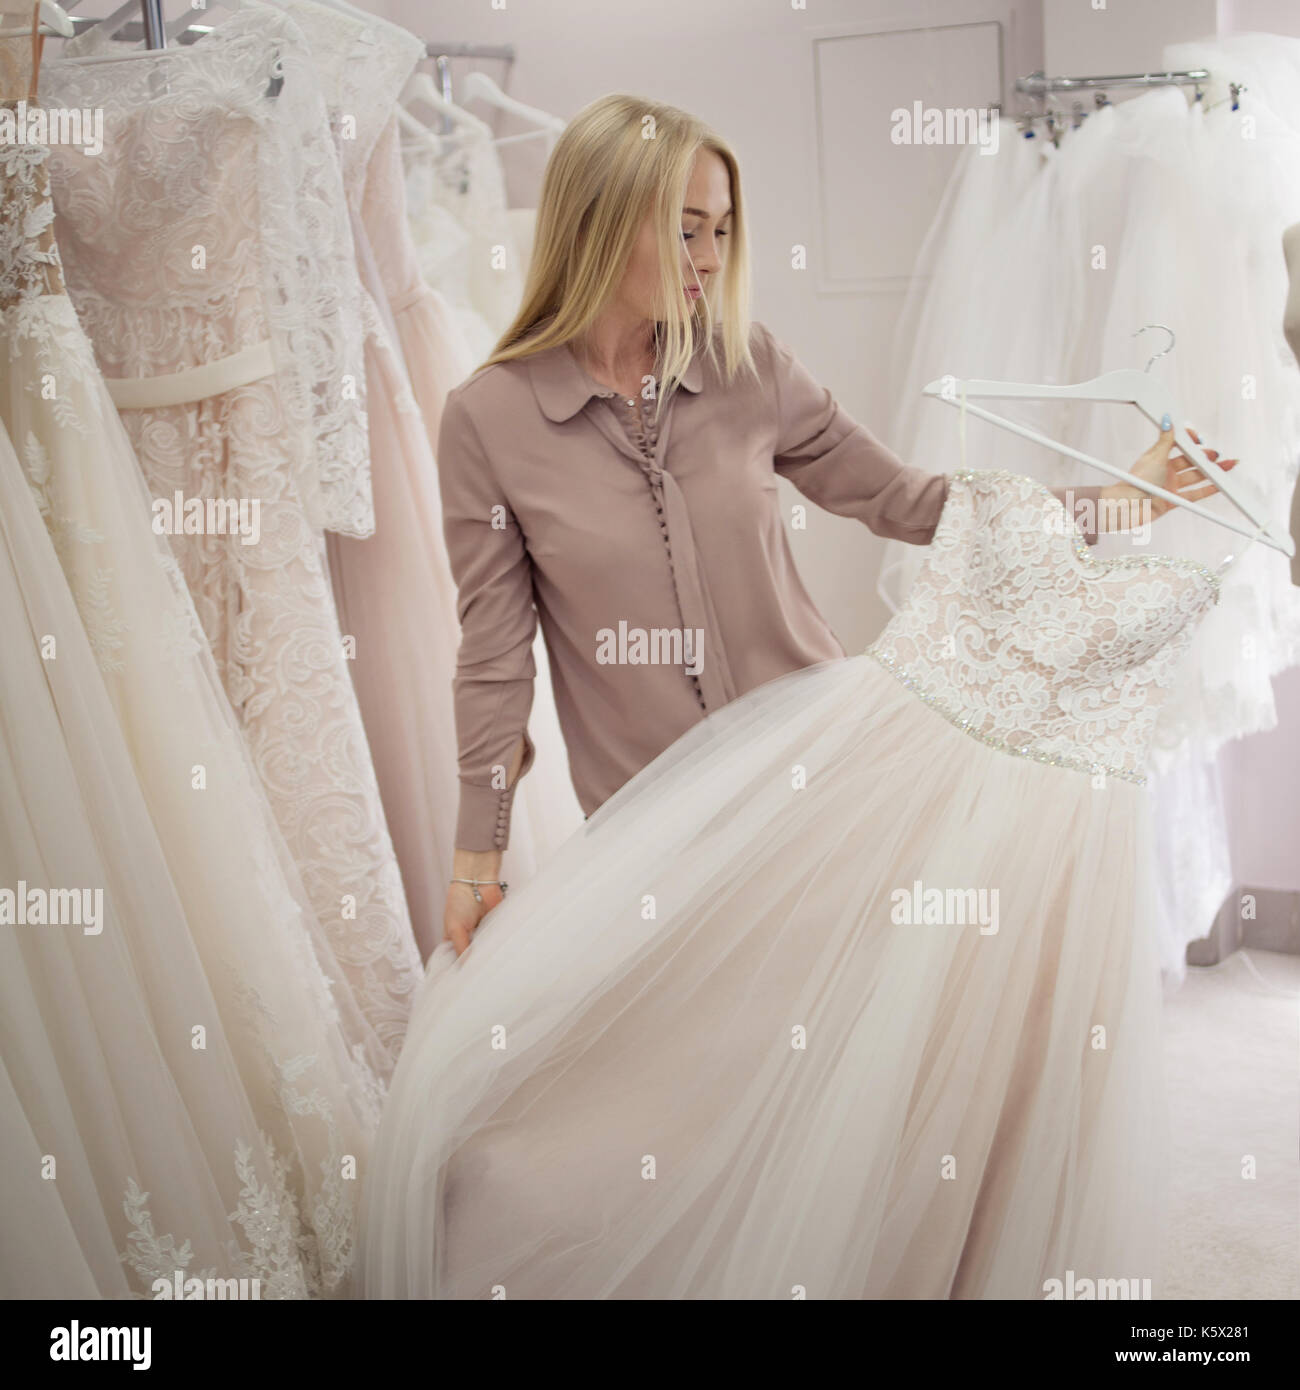 choosing a wedding dress